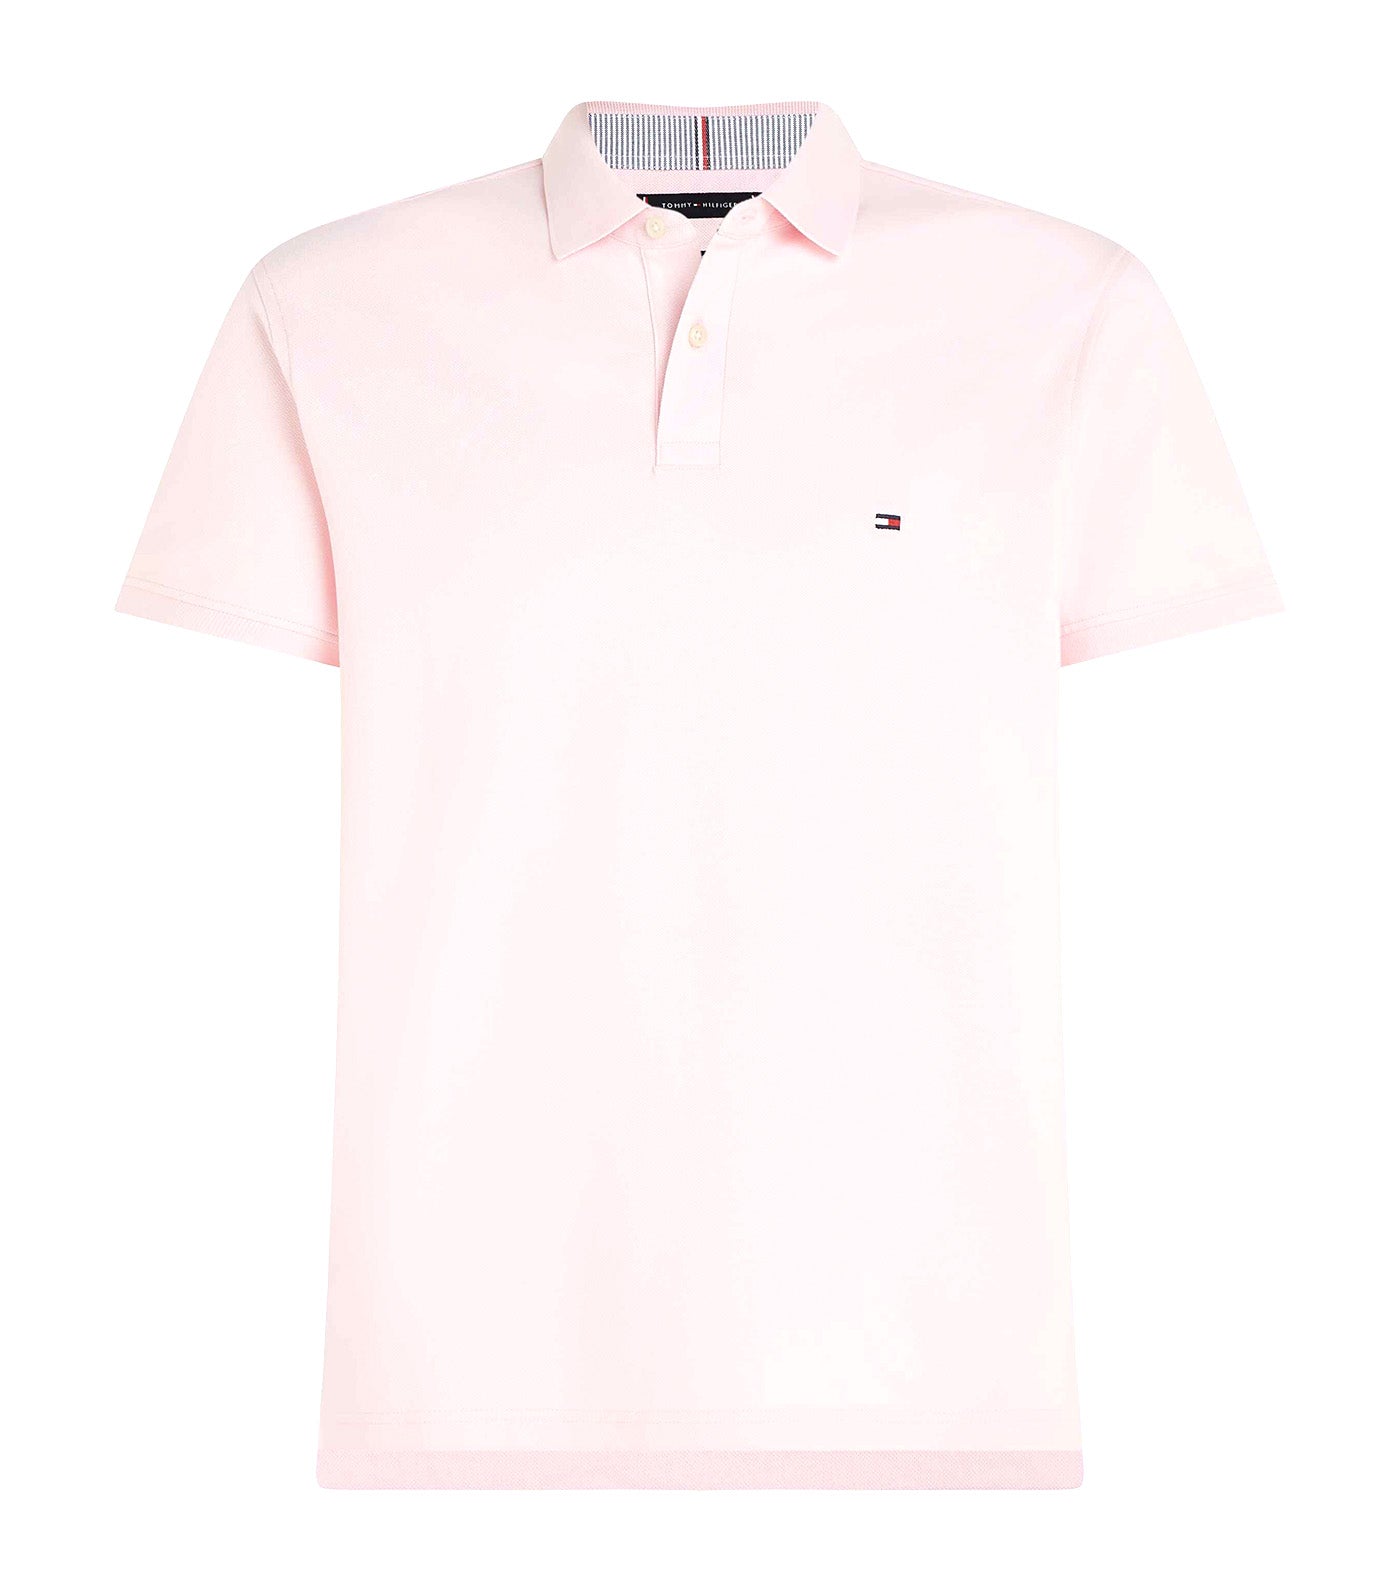 IM Shirt Men\'s Hilfiger Light Pink Polo Tommy 1985 Regular